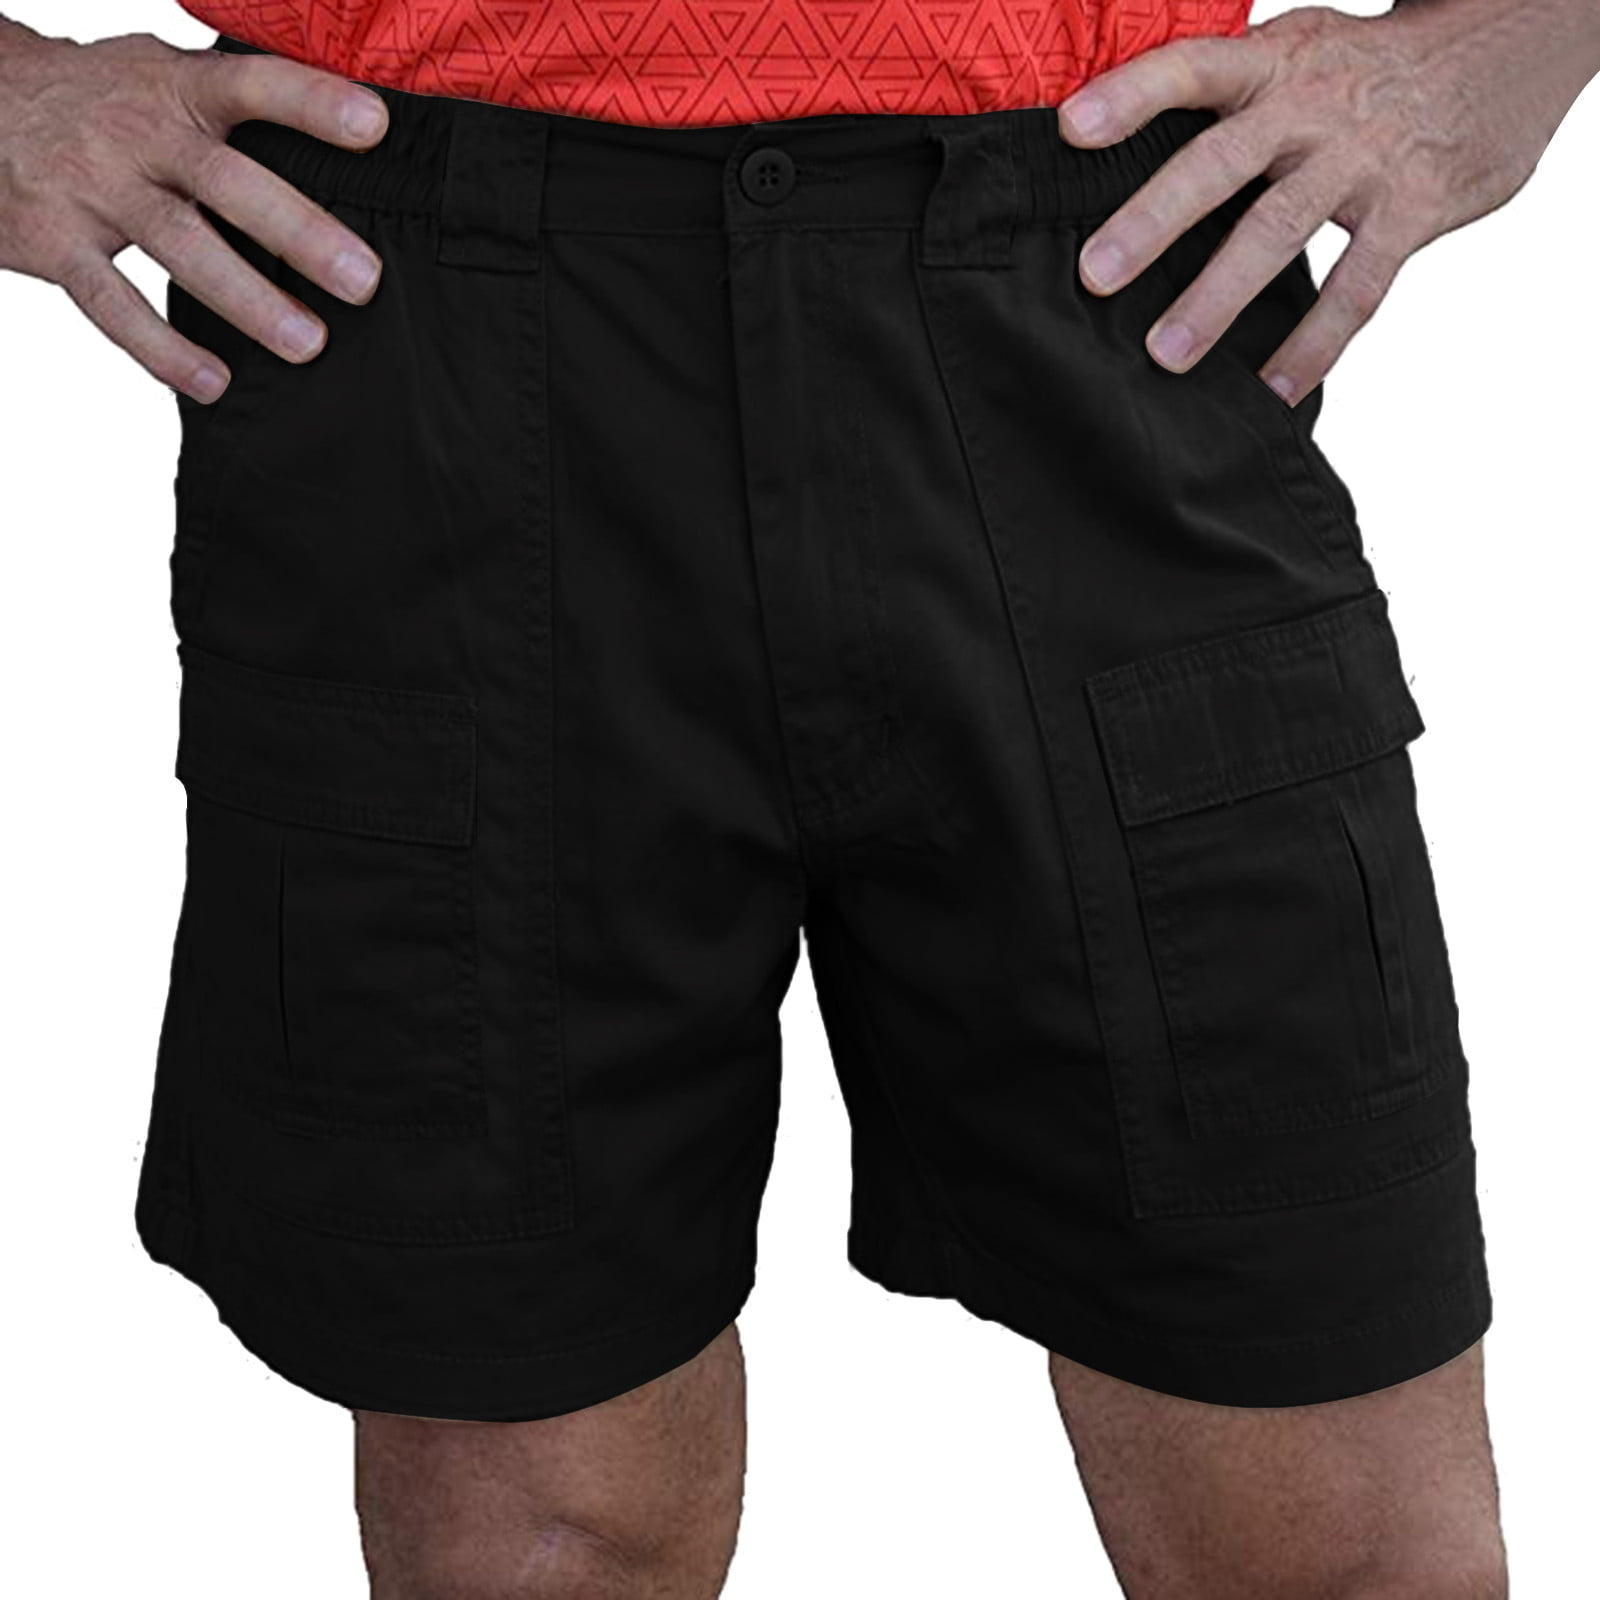 Aayomet Mens Shorts Men Fashion Casual Shorts Solid Color Multi pocket ...